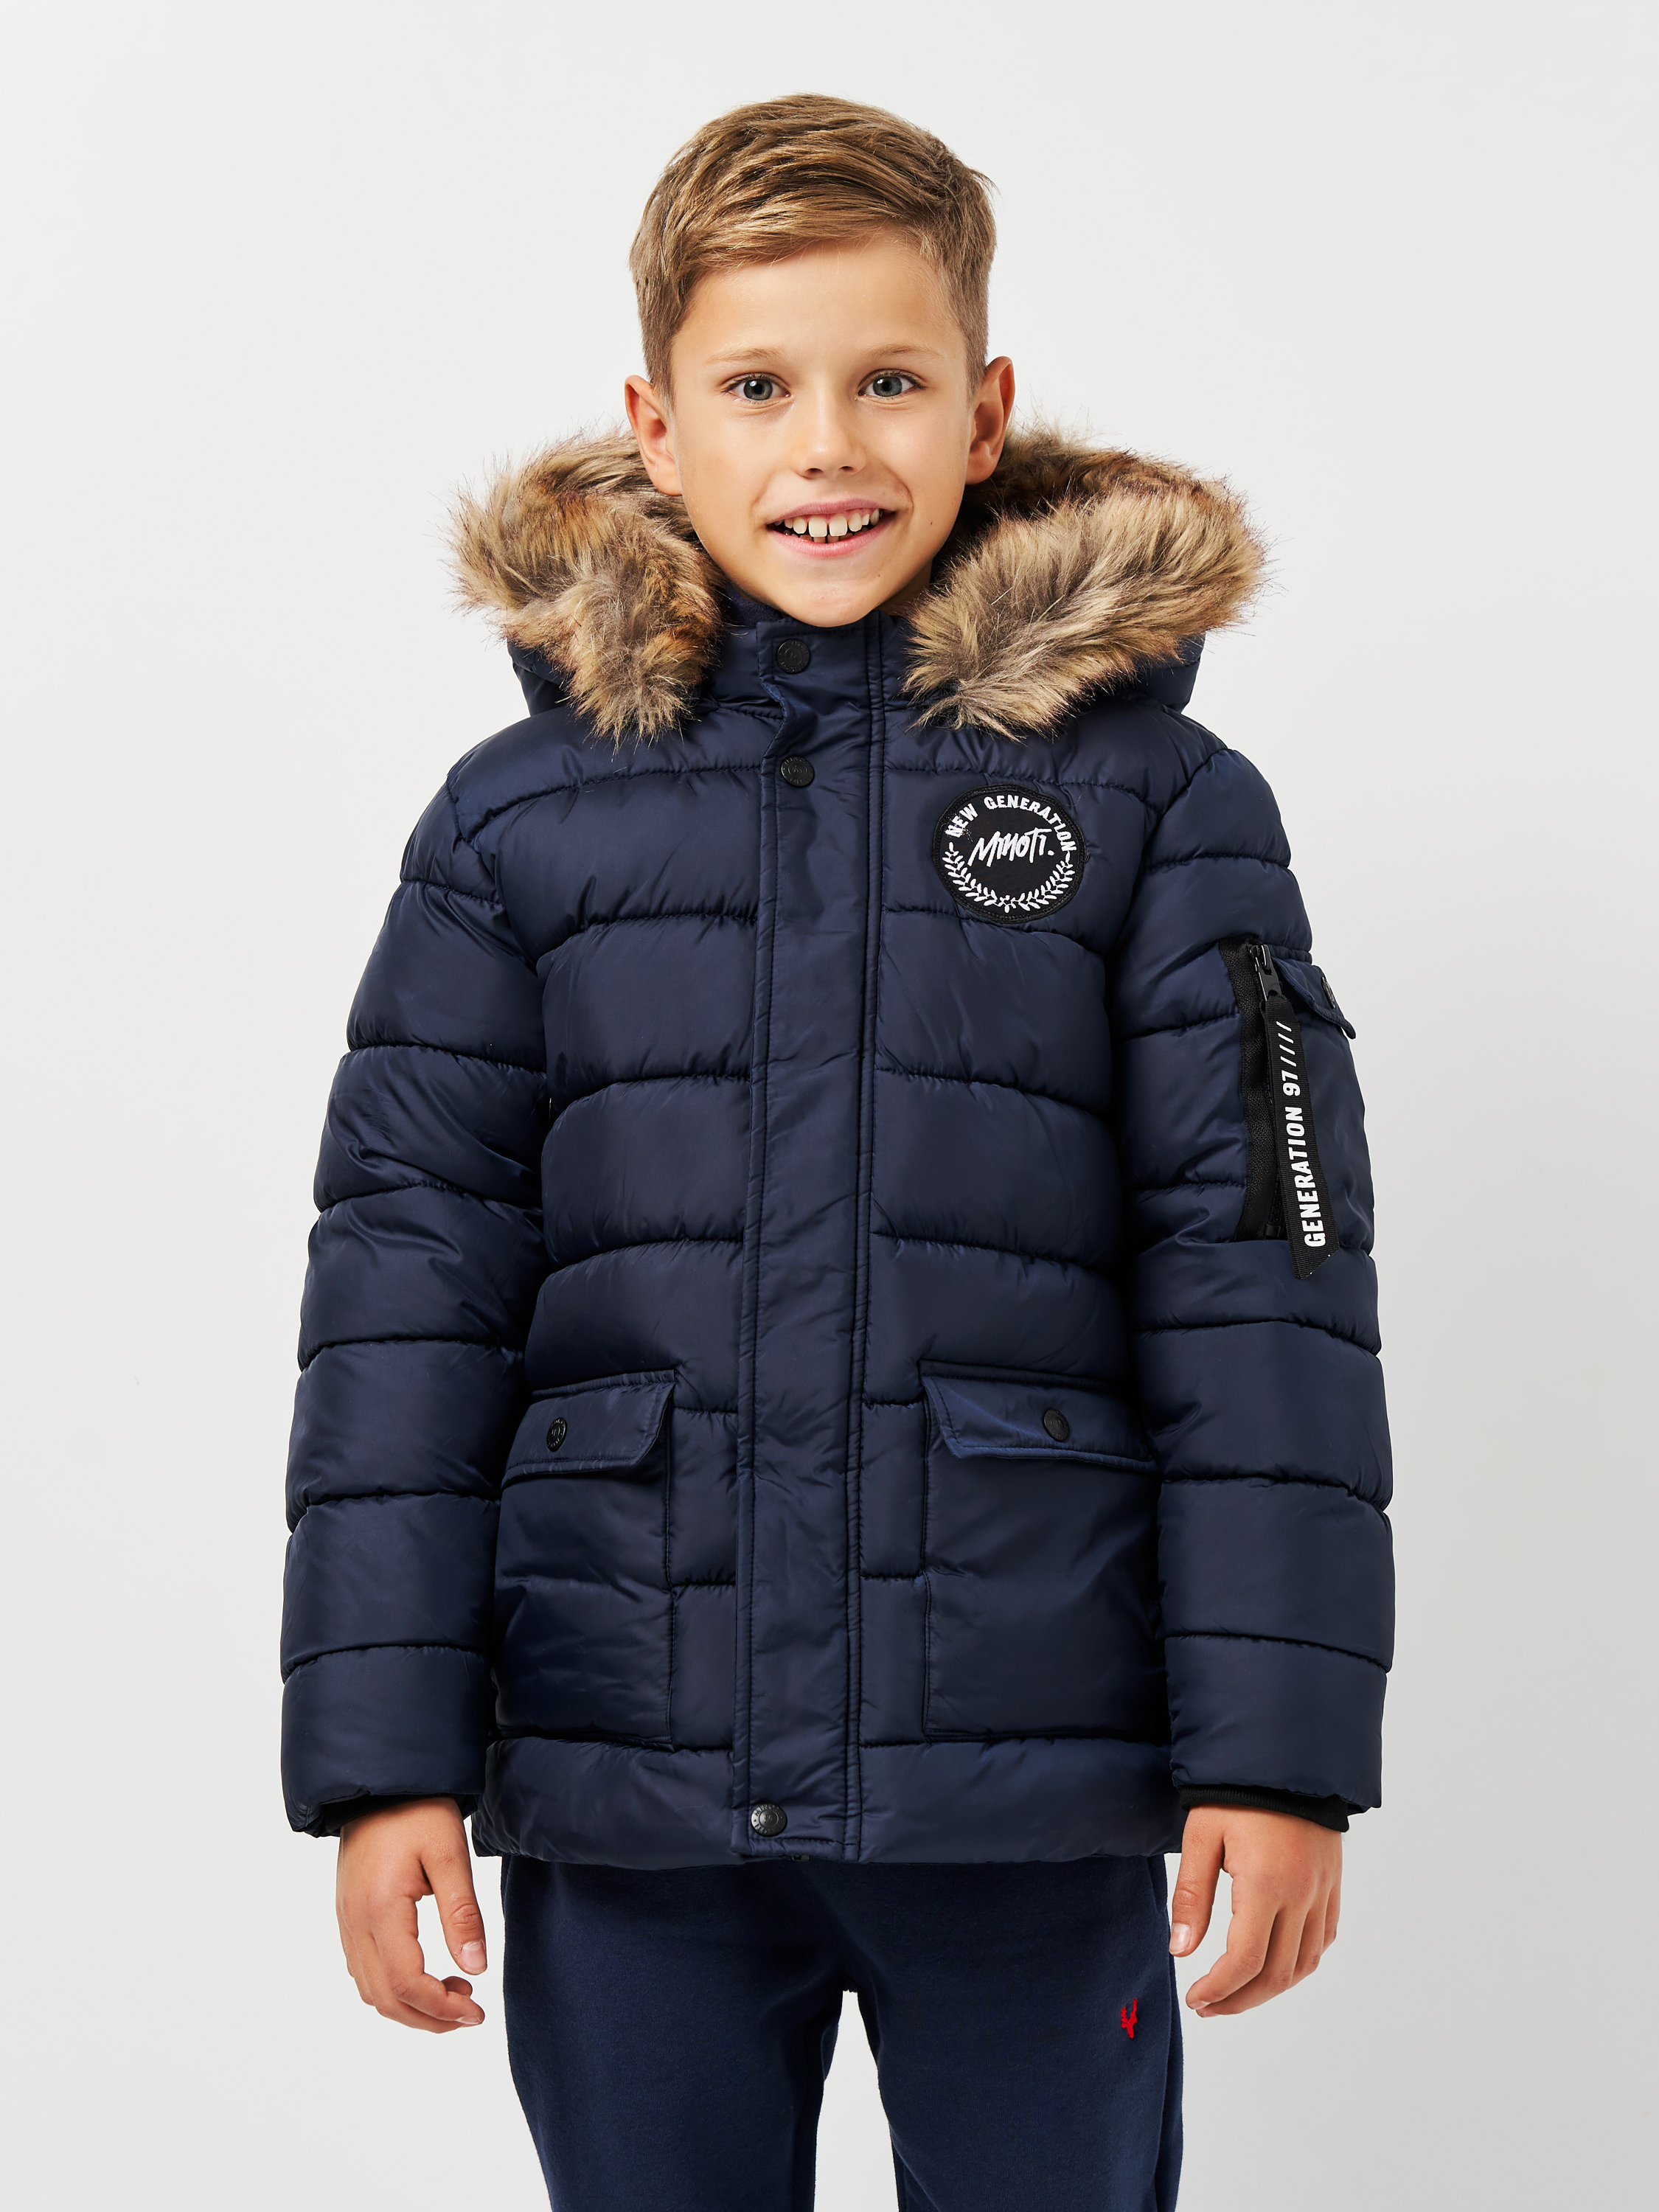 Акция на Підліткова зимова довга куртка для хлопчика Minoti 15coat 46 39616TEN 158-164 см Синя от Rozetka